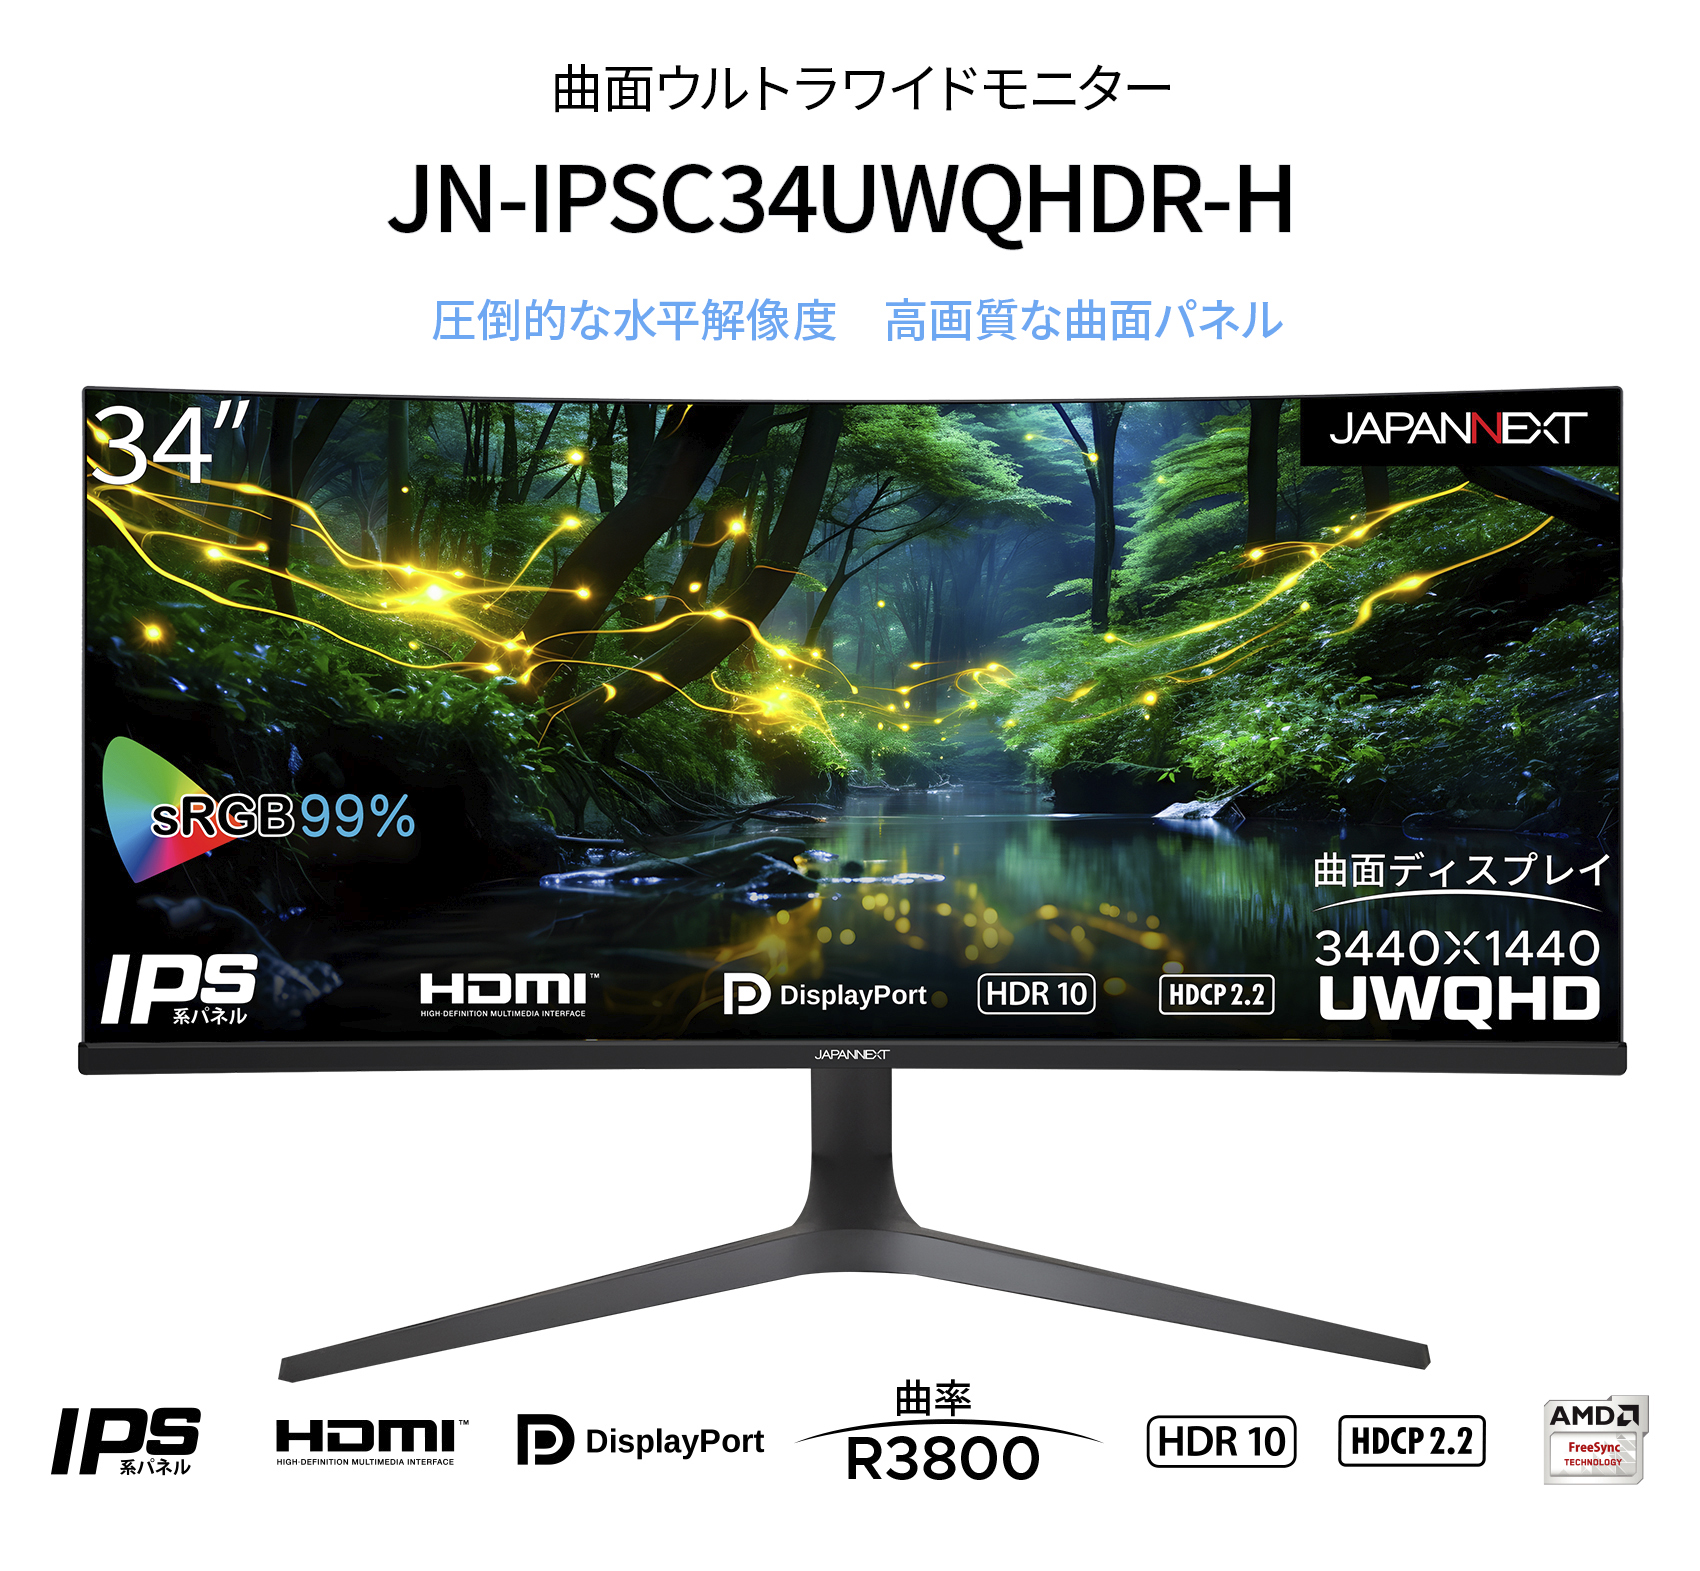 JAPANNEXT 34インチ曲面 IPSパネル UWQHD(3440 x 1440)解像度 ウルトラワイドモニター  JN-IPSC34UWQHDR-H HDMI DP sRGB99% 昇降式スタンド ジャパンネクスト